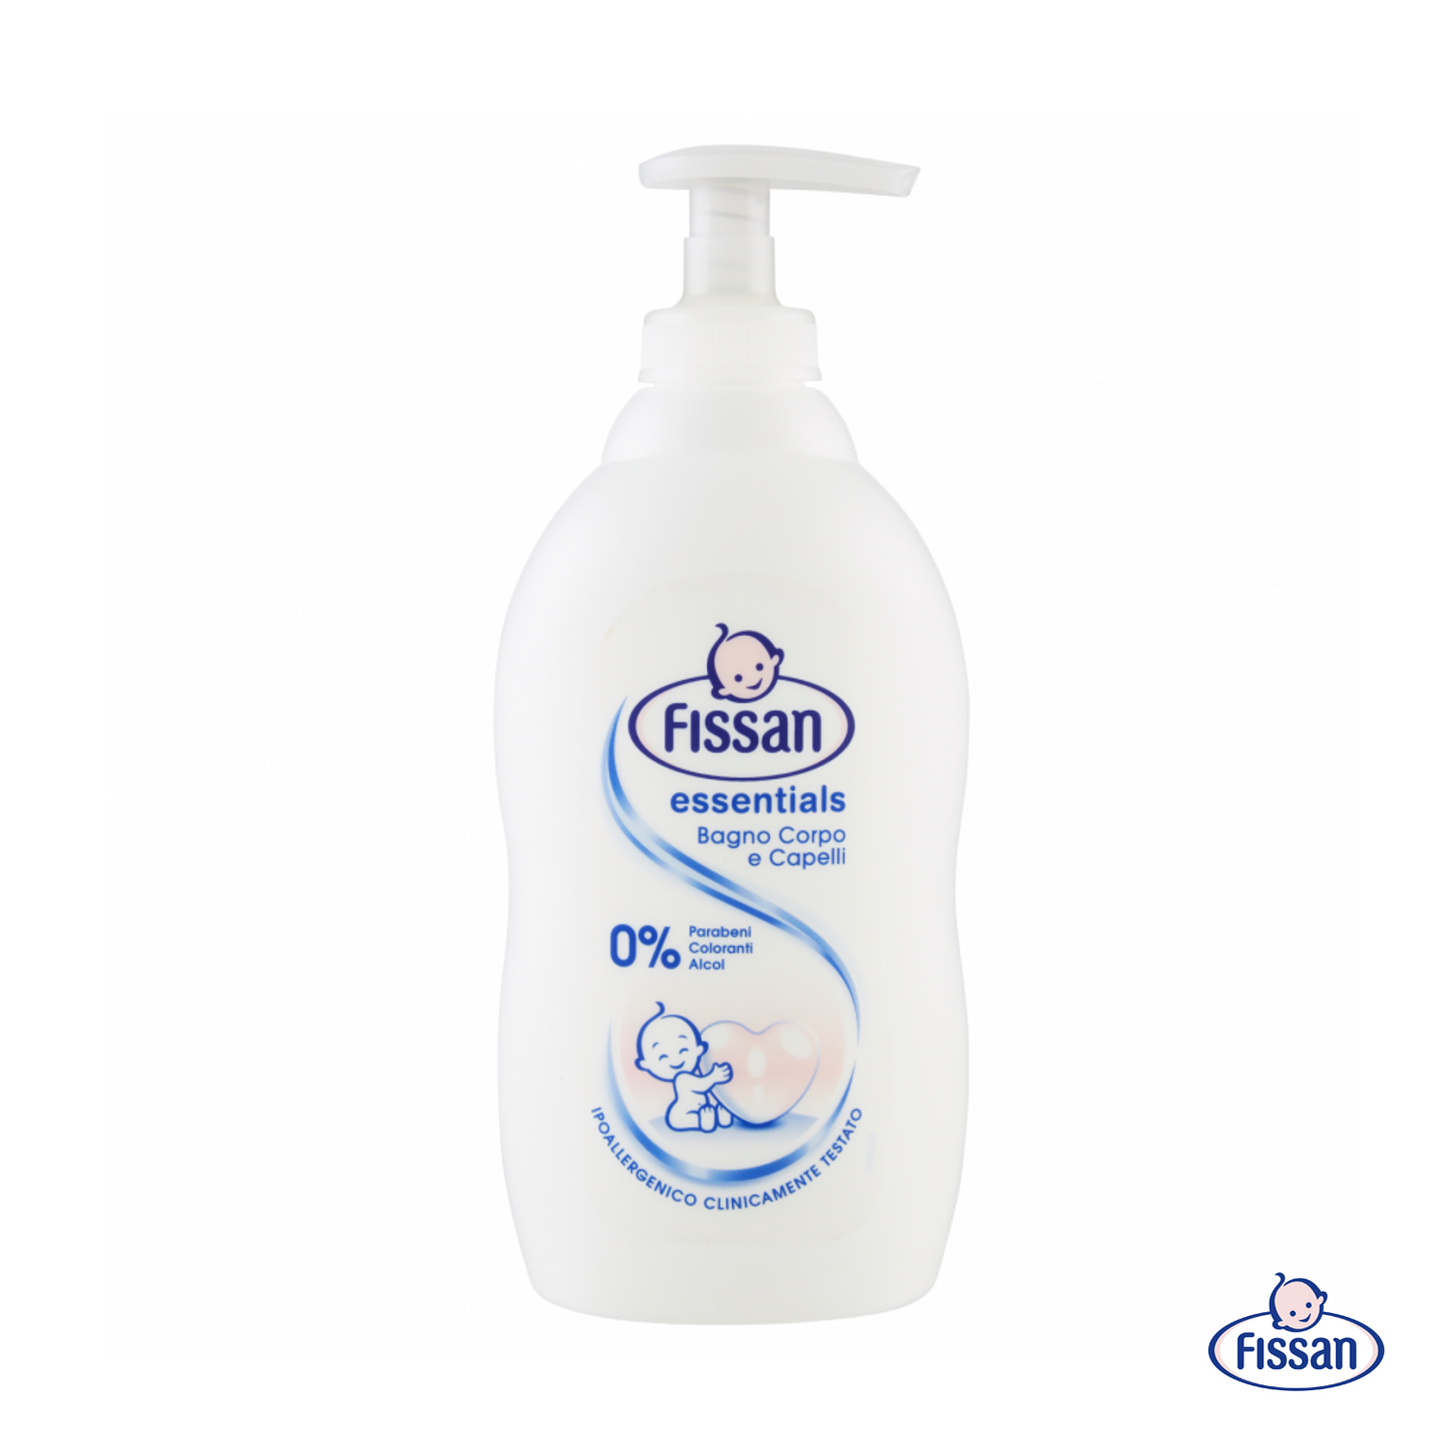 Fissan - Essential Shampoo & Bagno 2 in 1